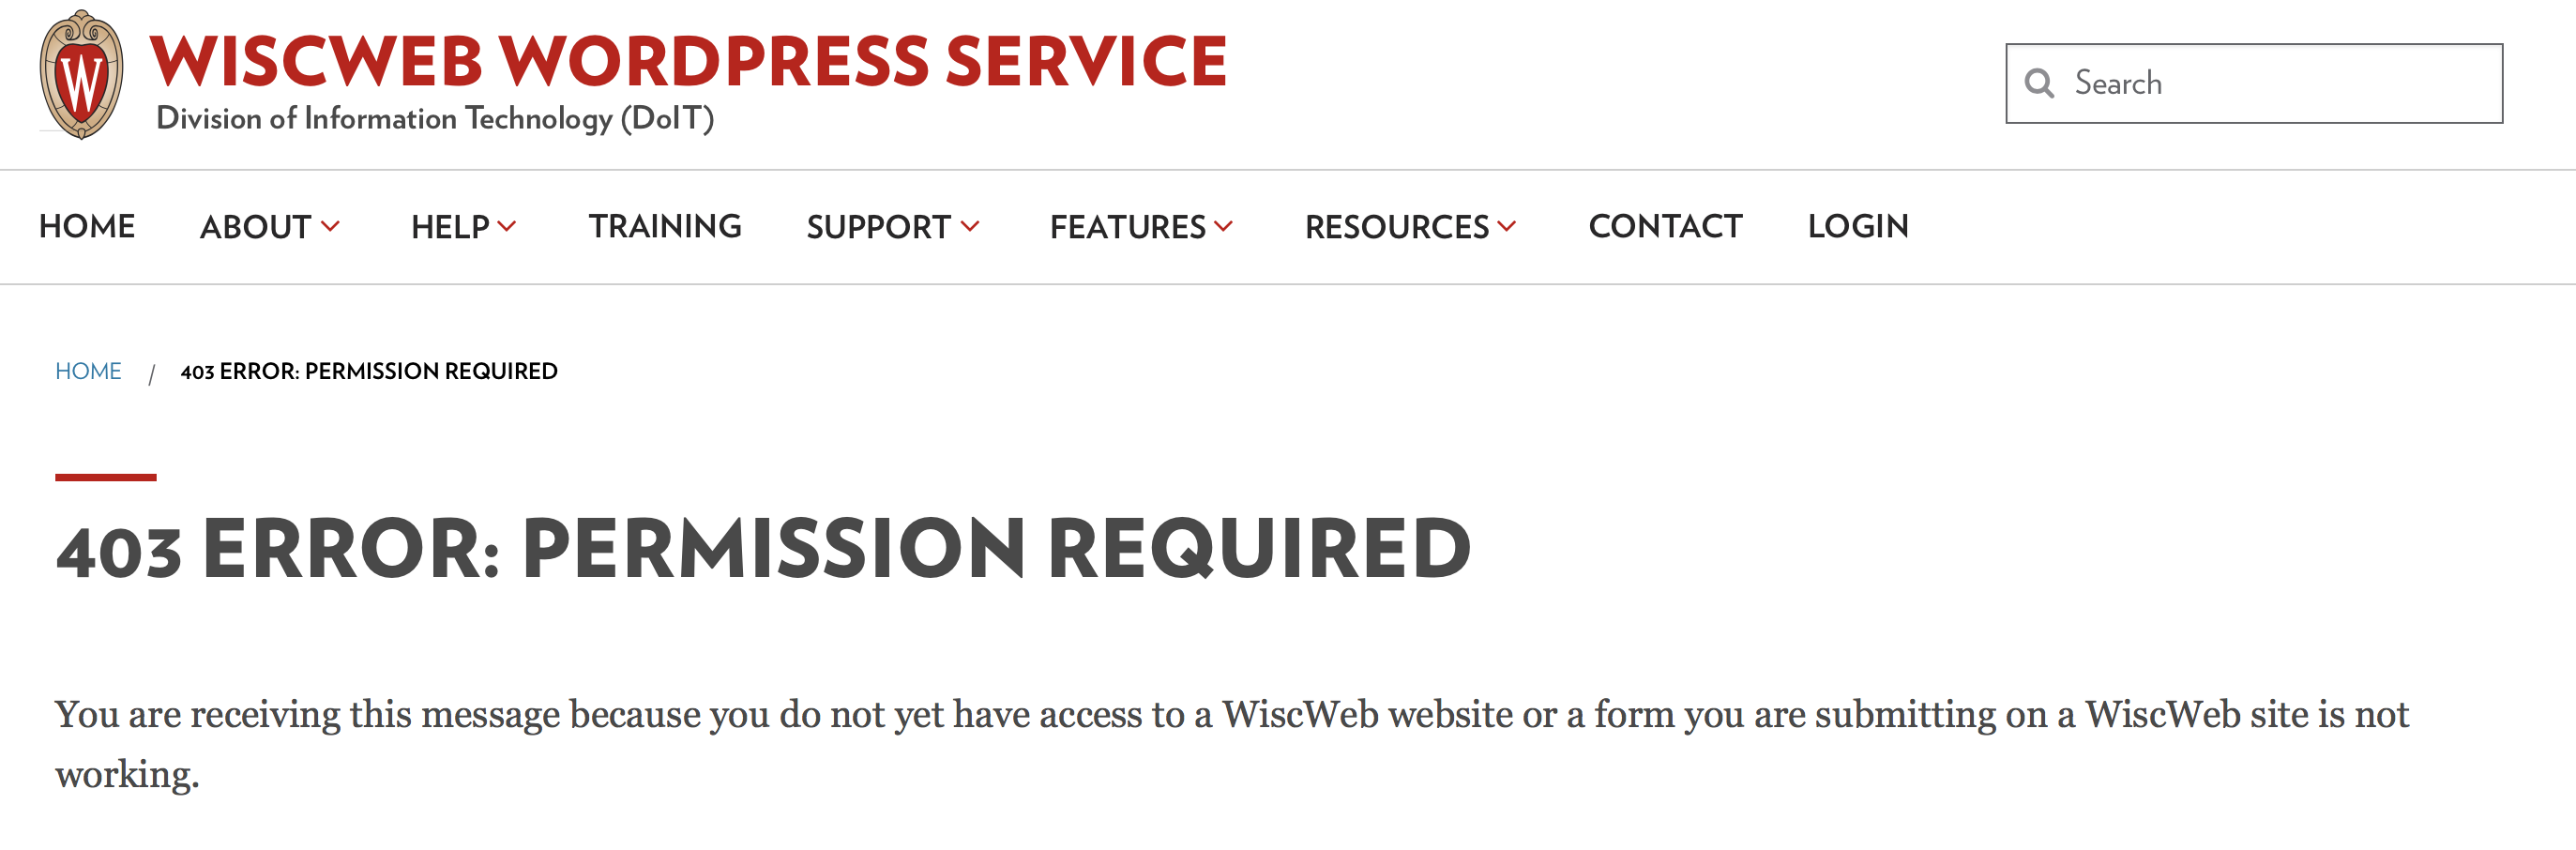 403 Error Message in WiscWeb